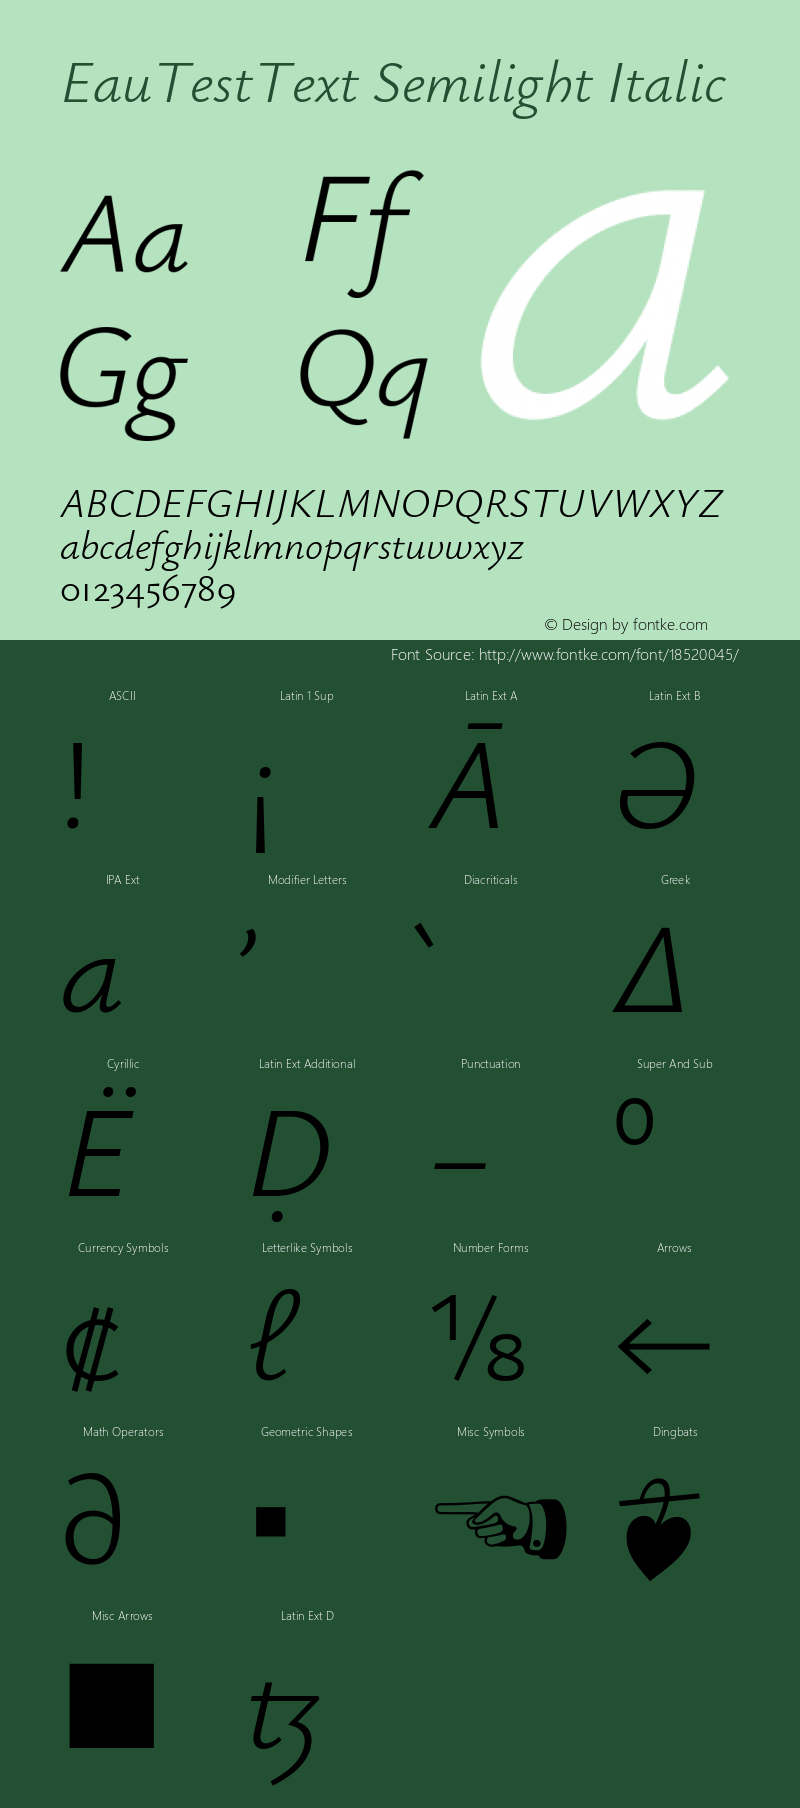 EauTestText Semilight Italic Version 0.001 Font Sample